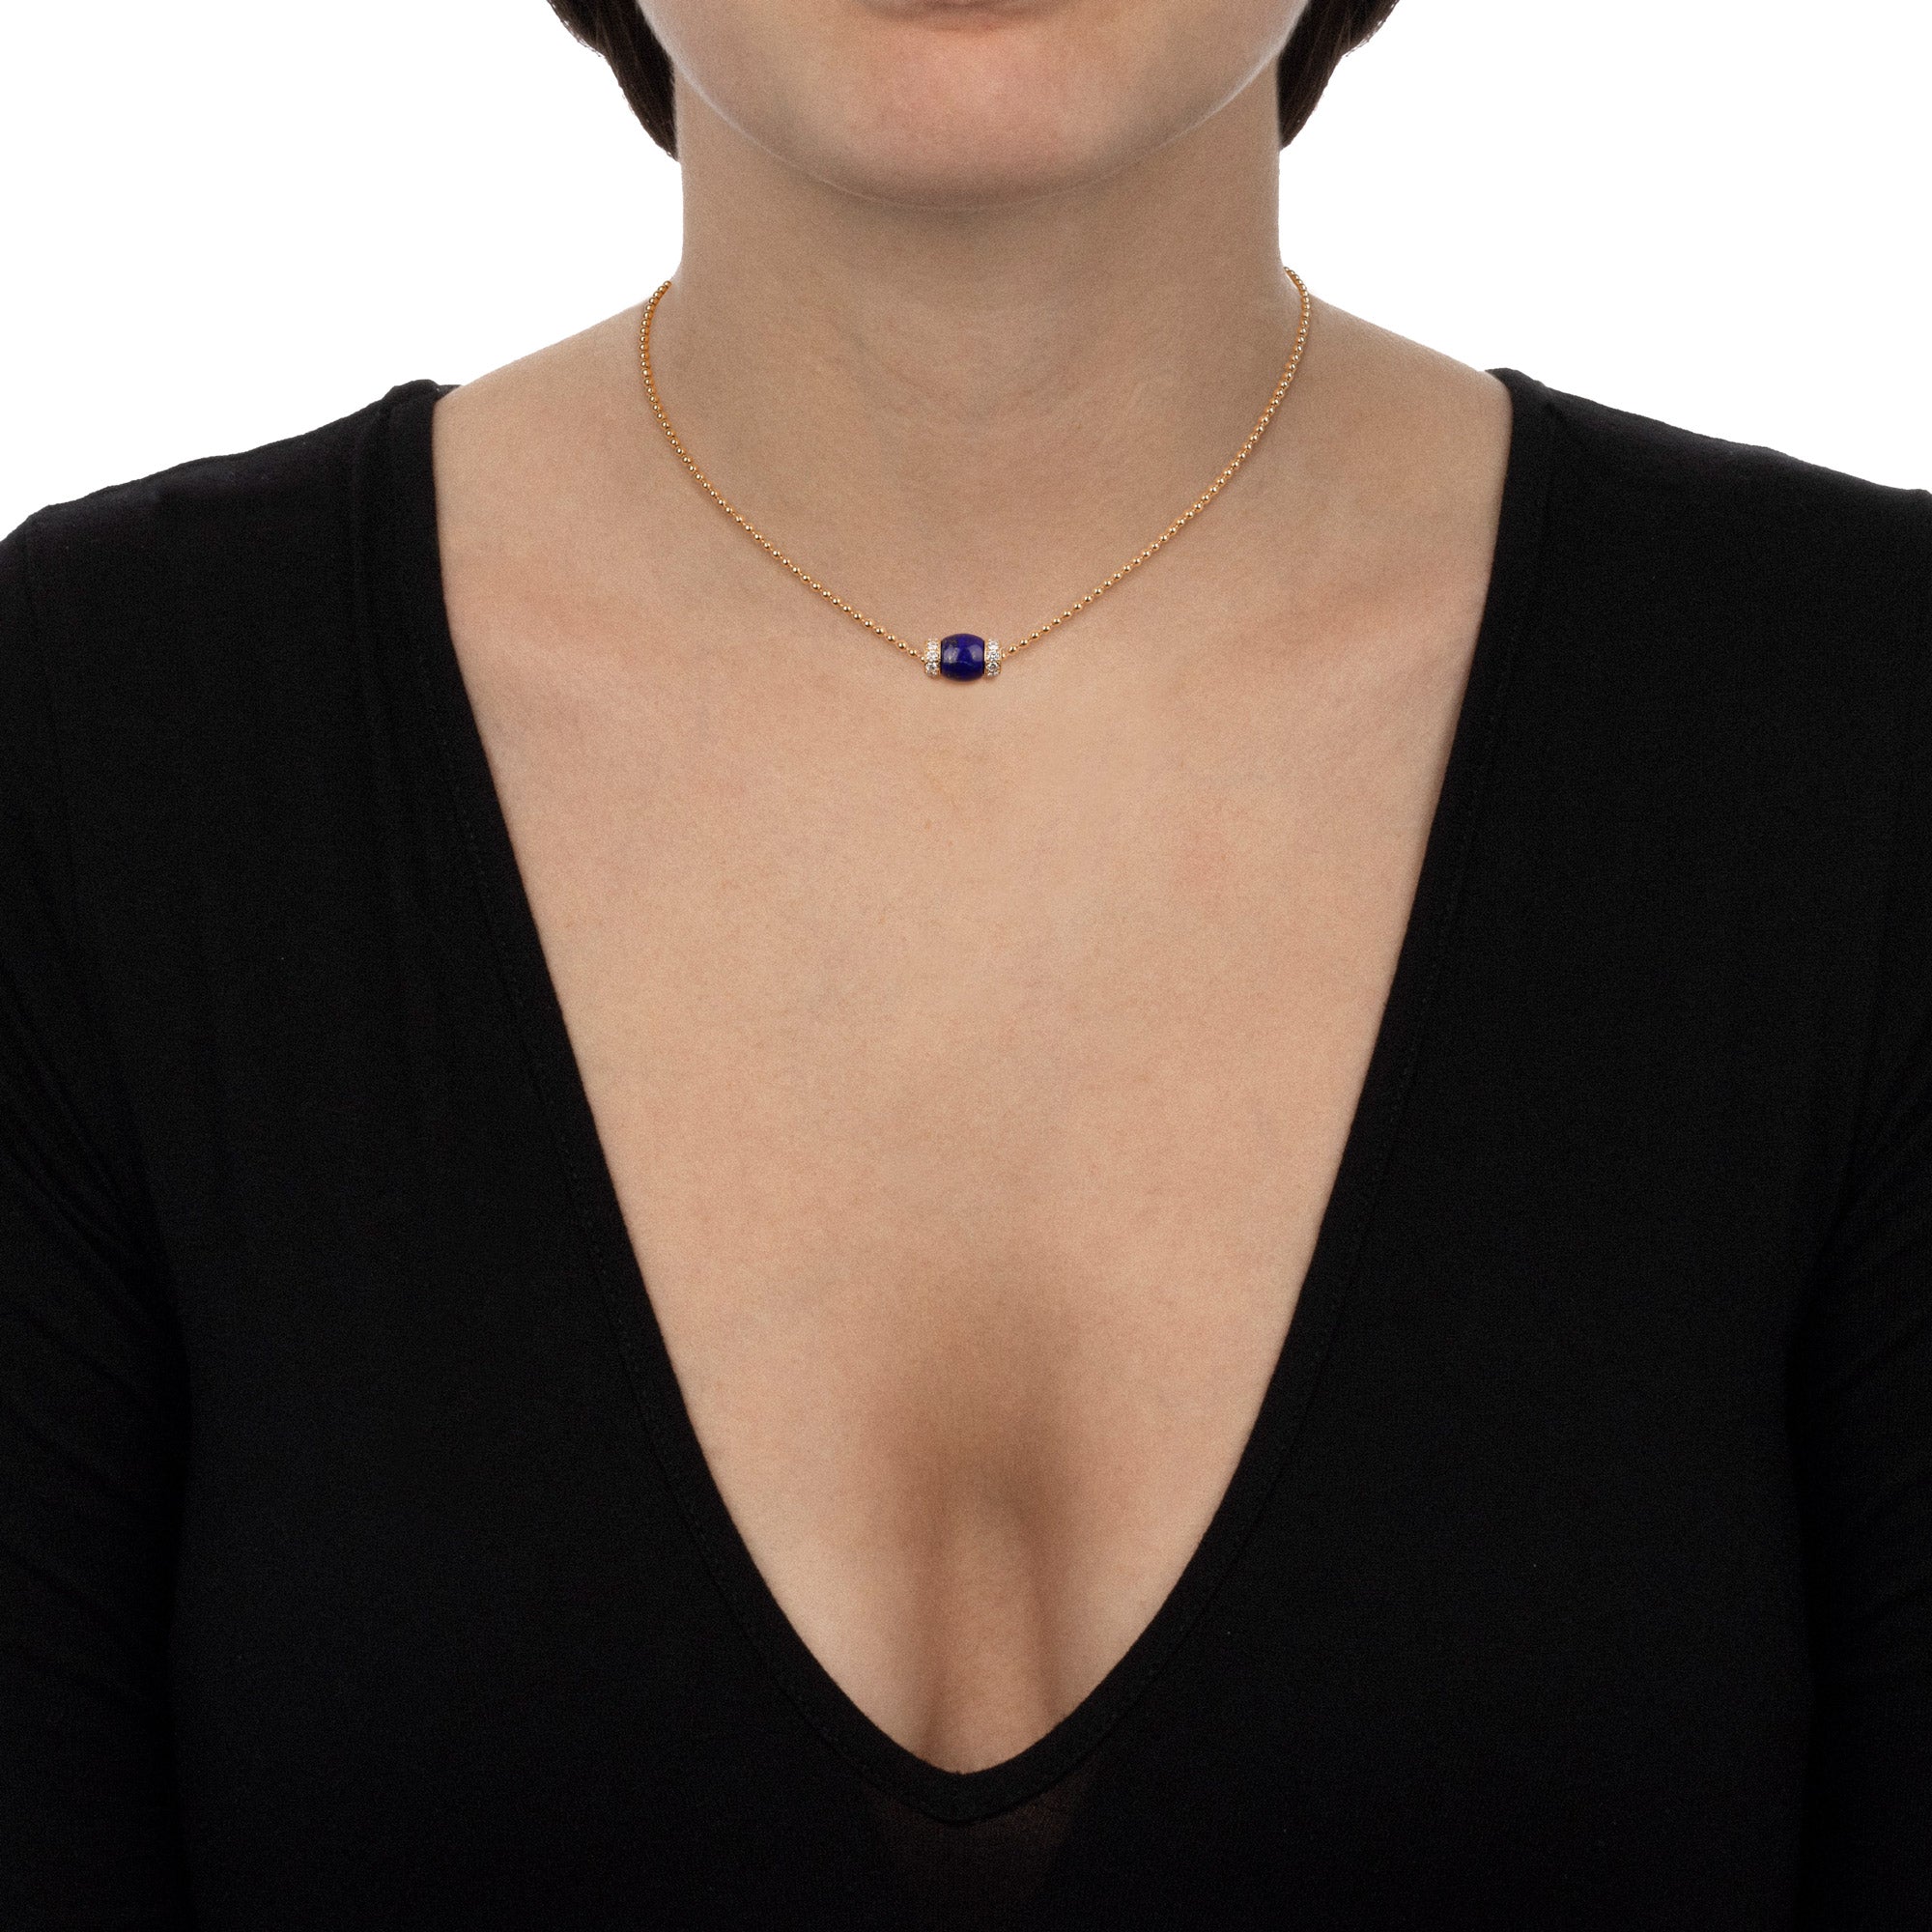 Worn - Le Carrousel Necklace Lapis lazuli and Diamonds